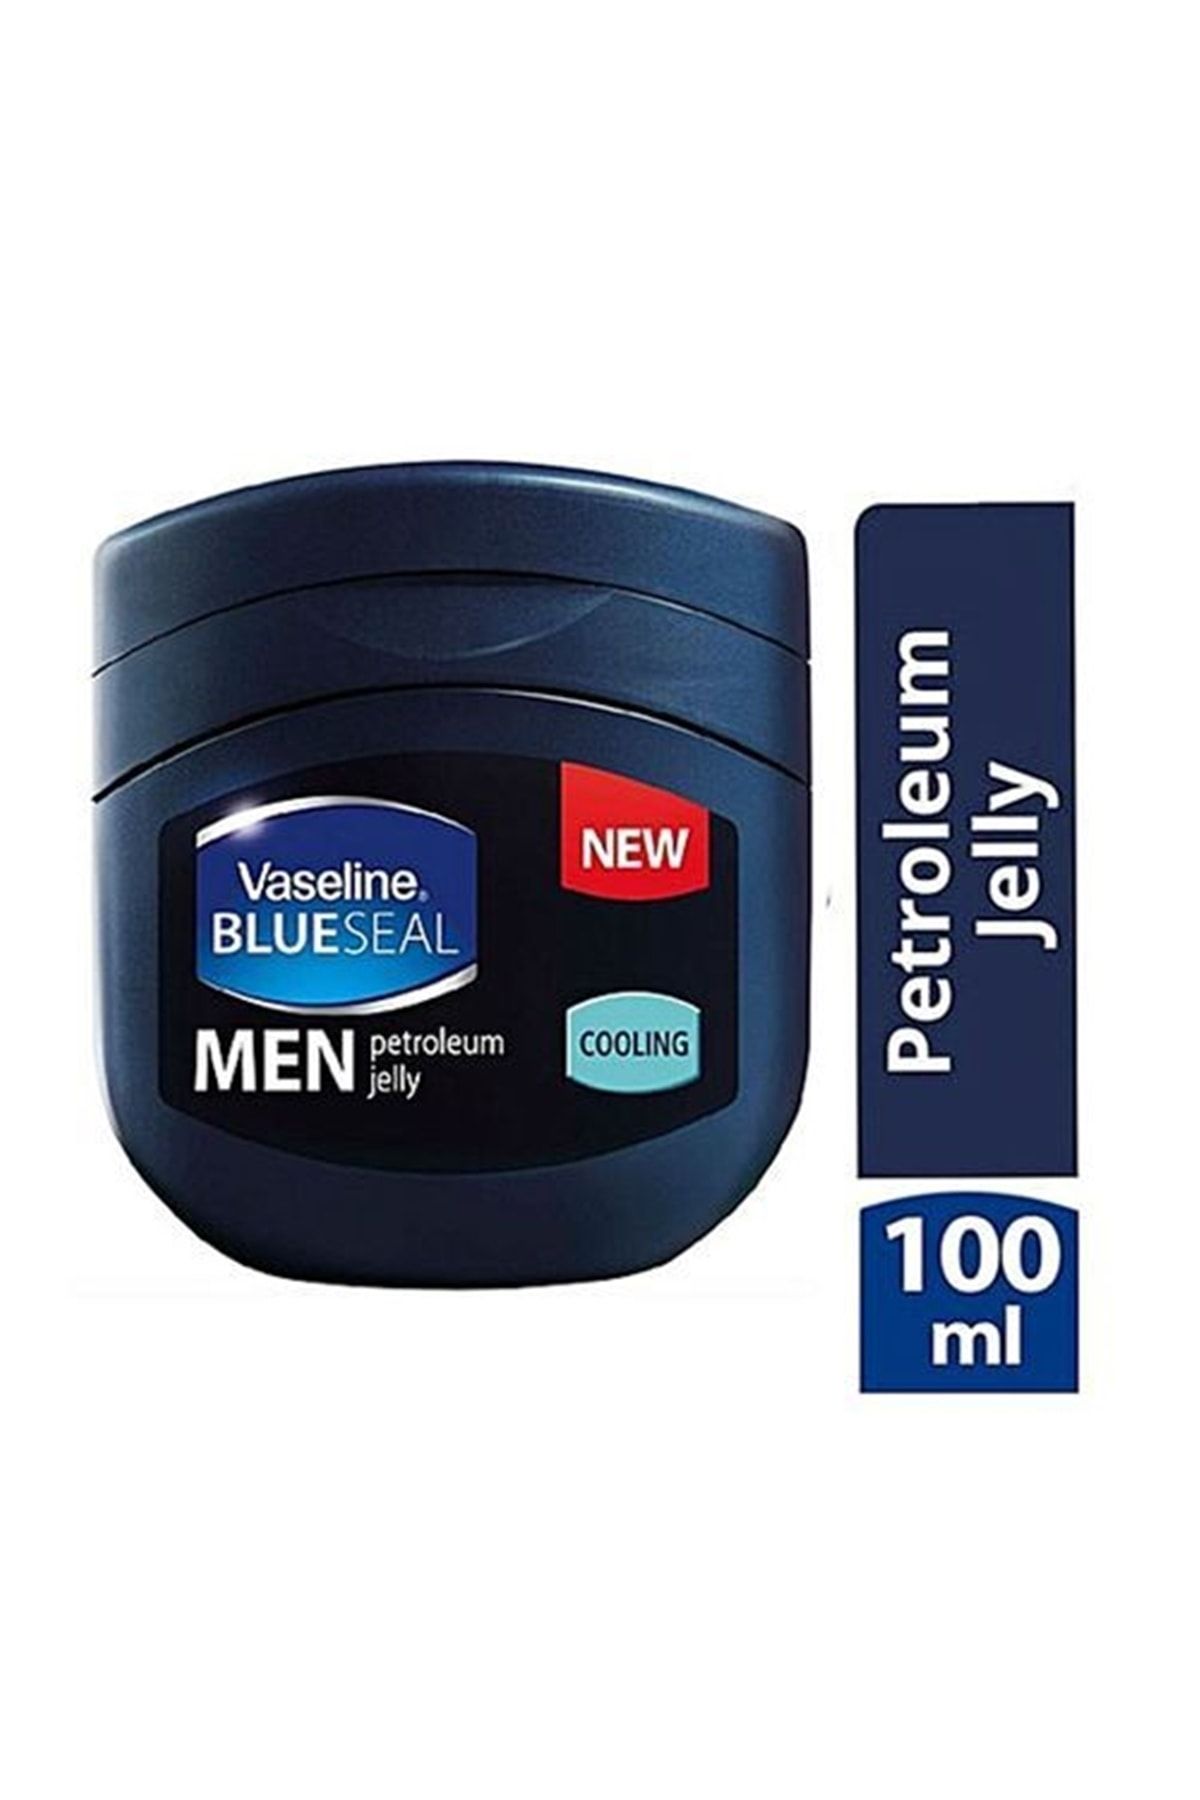 Vaseline Blueseal Vazelin Erkek 100 ml Men Petroleum Jelly Cooling New